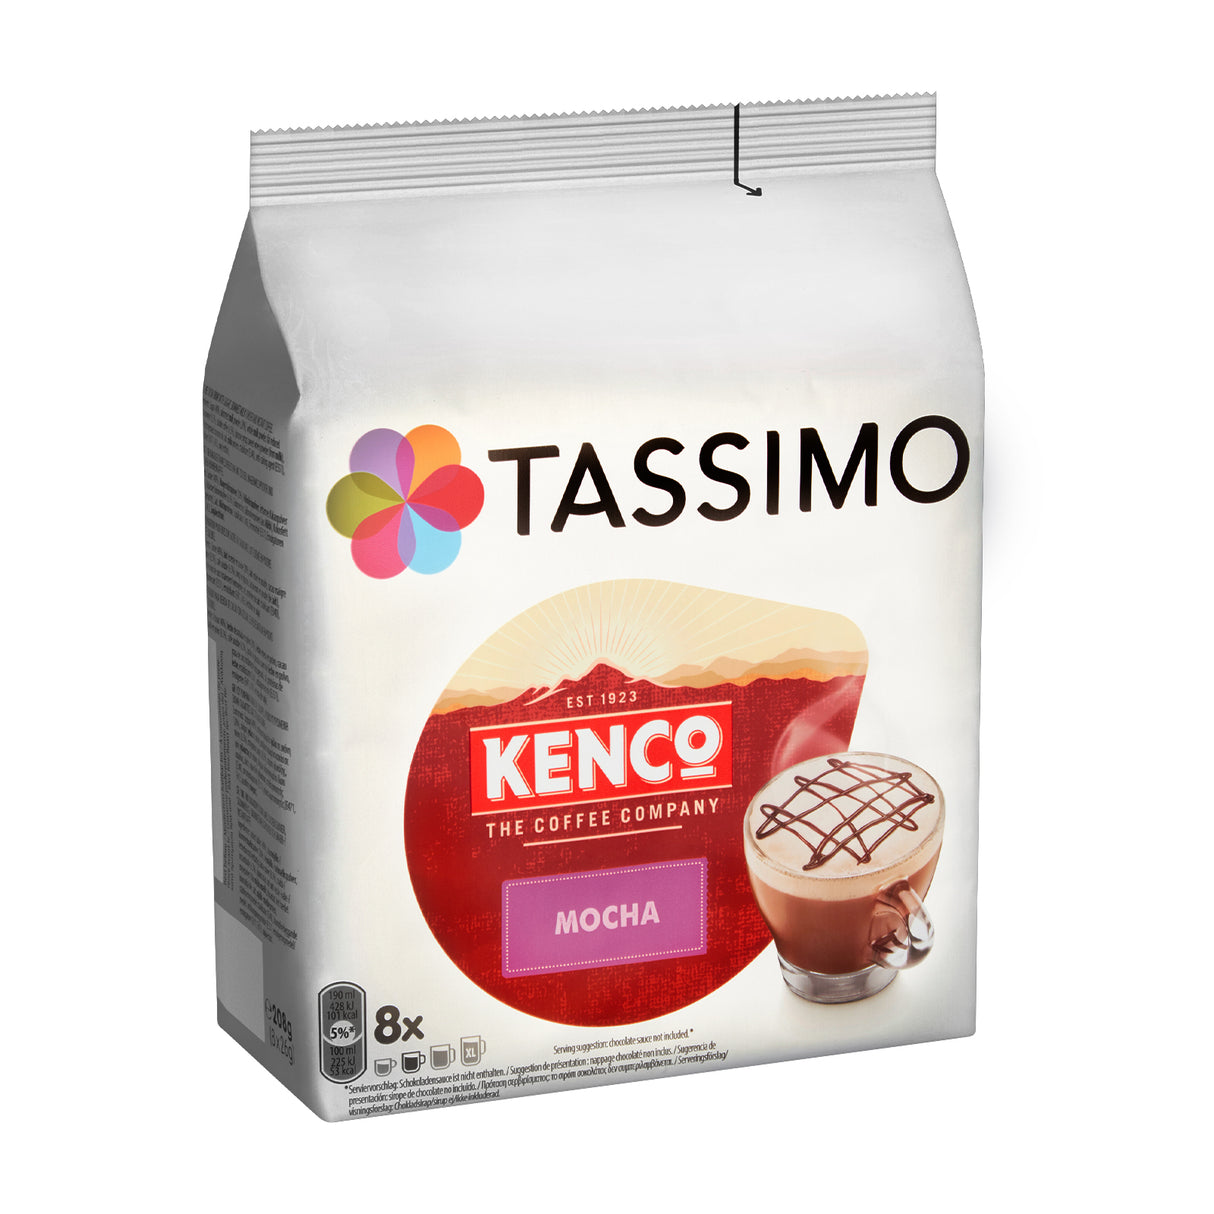 Tassimo Kenco Mocha coffee pods